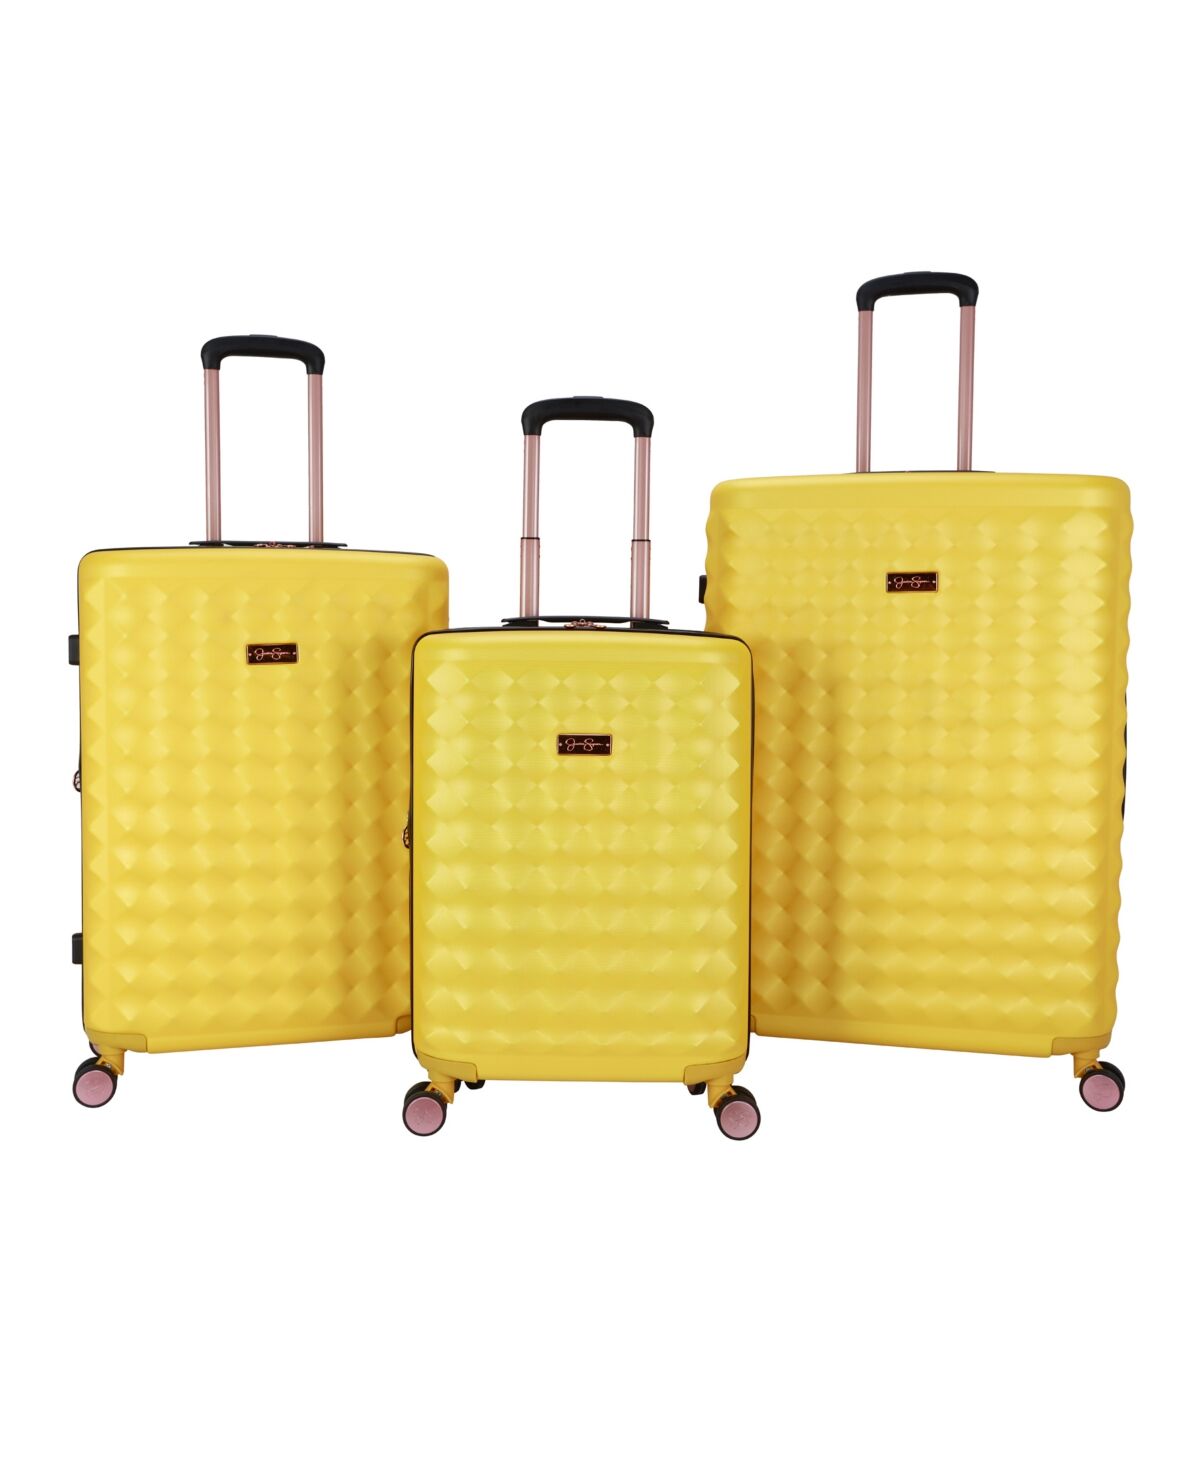 Jessica Simpson Vibrance 3 Piece Hardside Luggage Set - Yellow